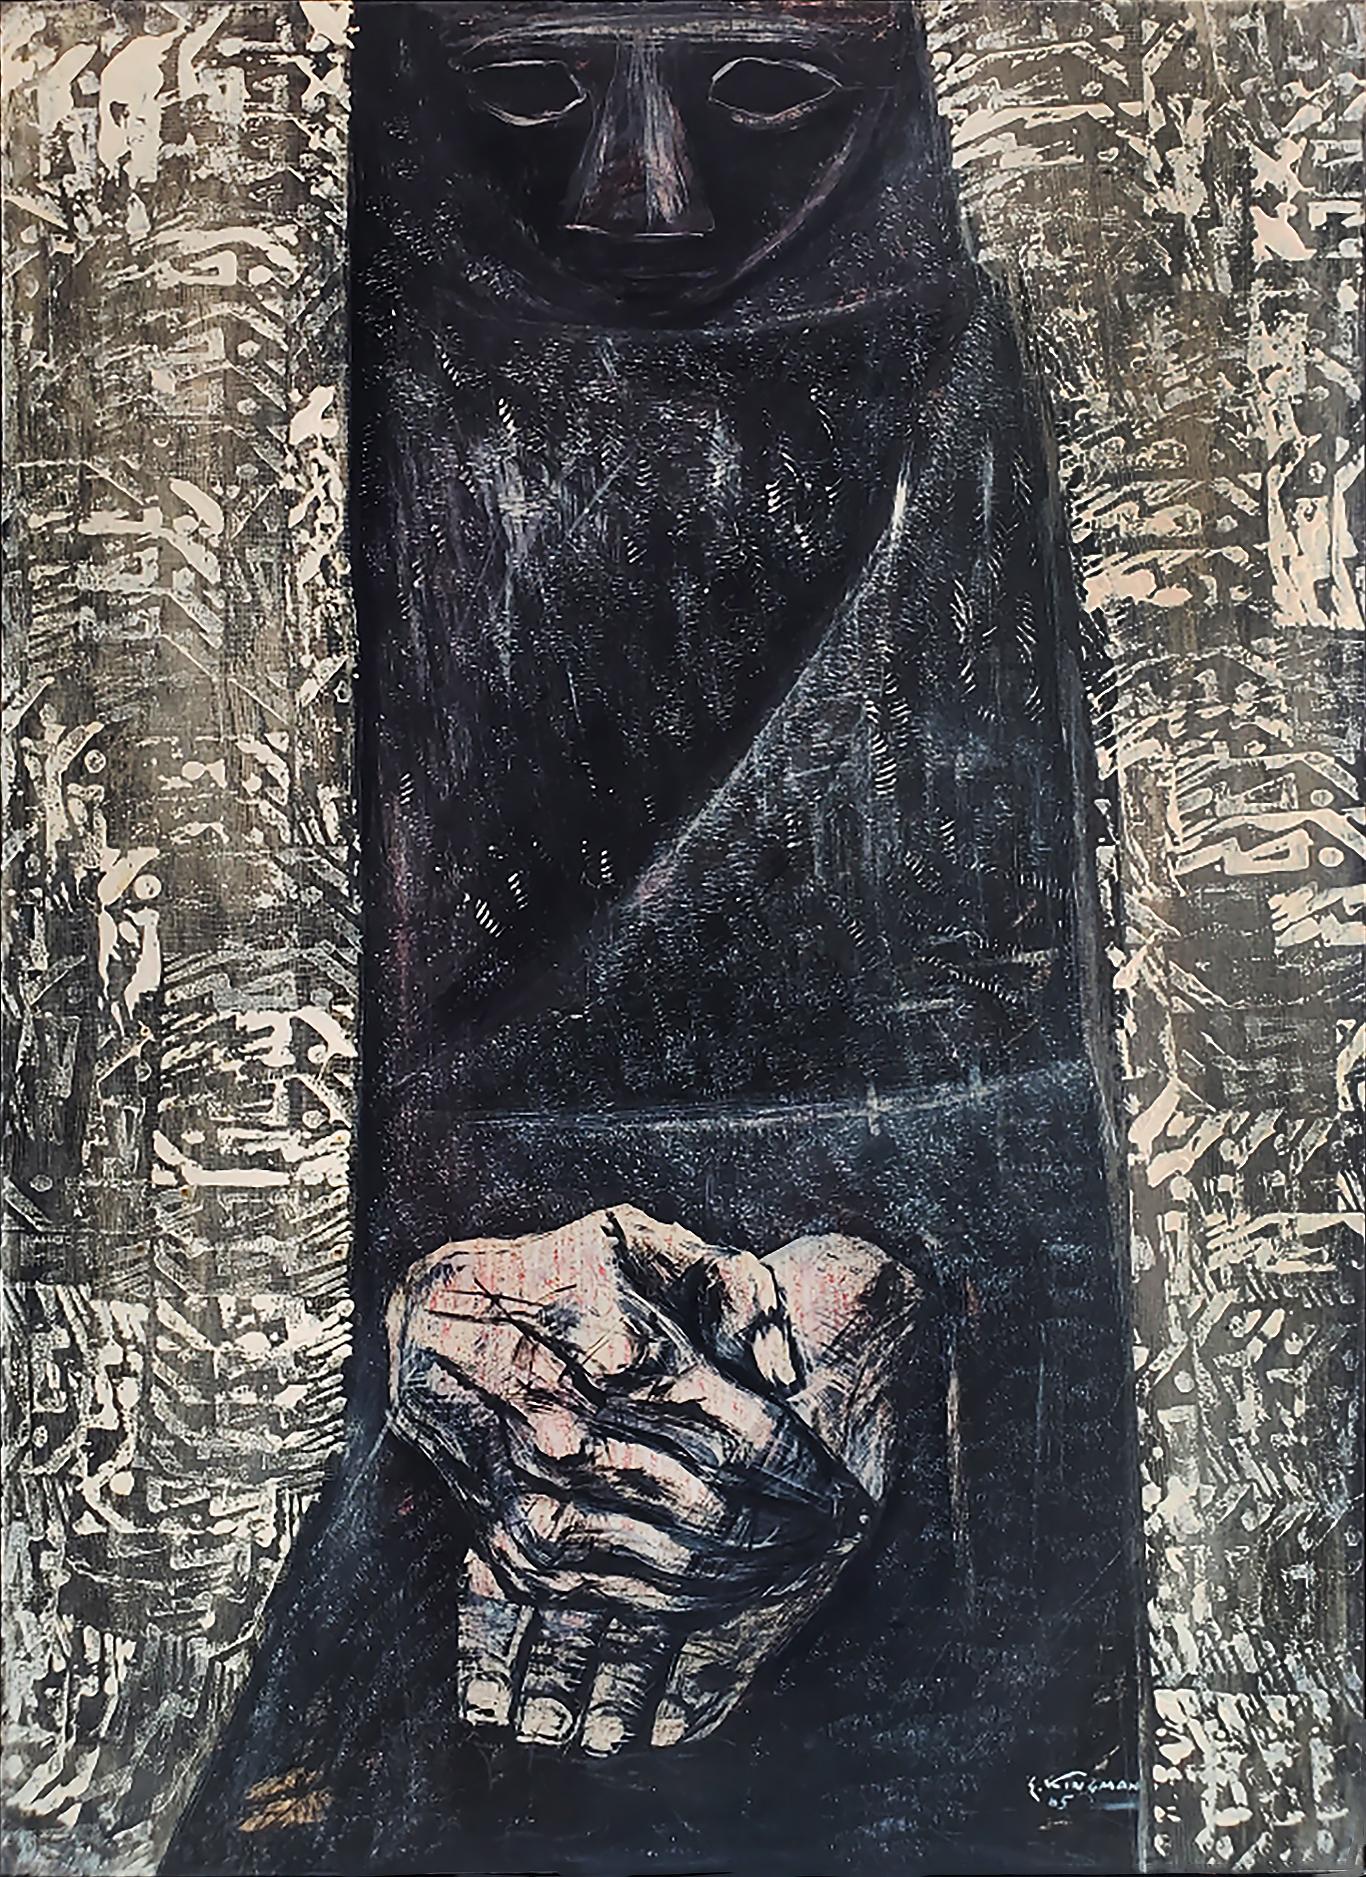 Eduardo Kingman Figurative Painting – Untitled - Mysteriöse Figur in schwarzem Pancho und ausdrucksstarken Händen